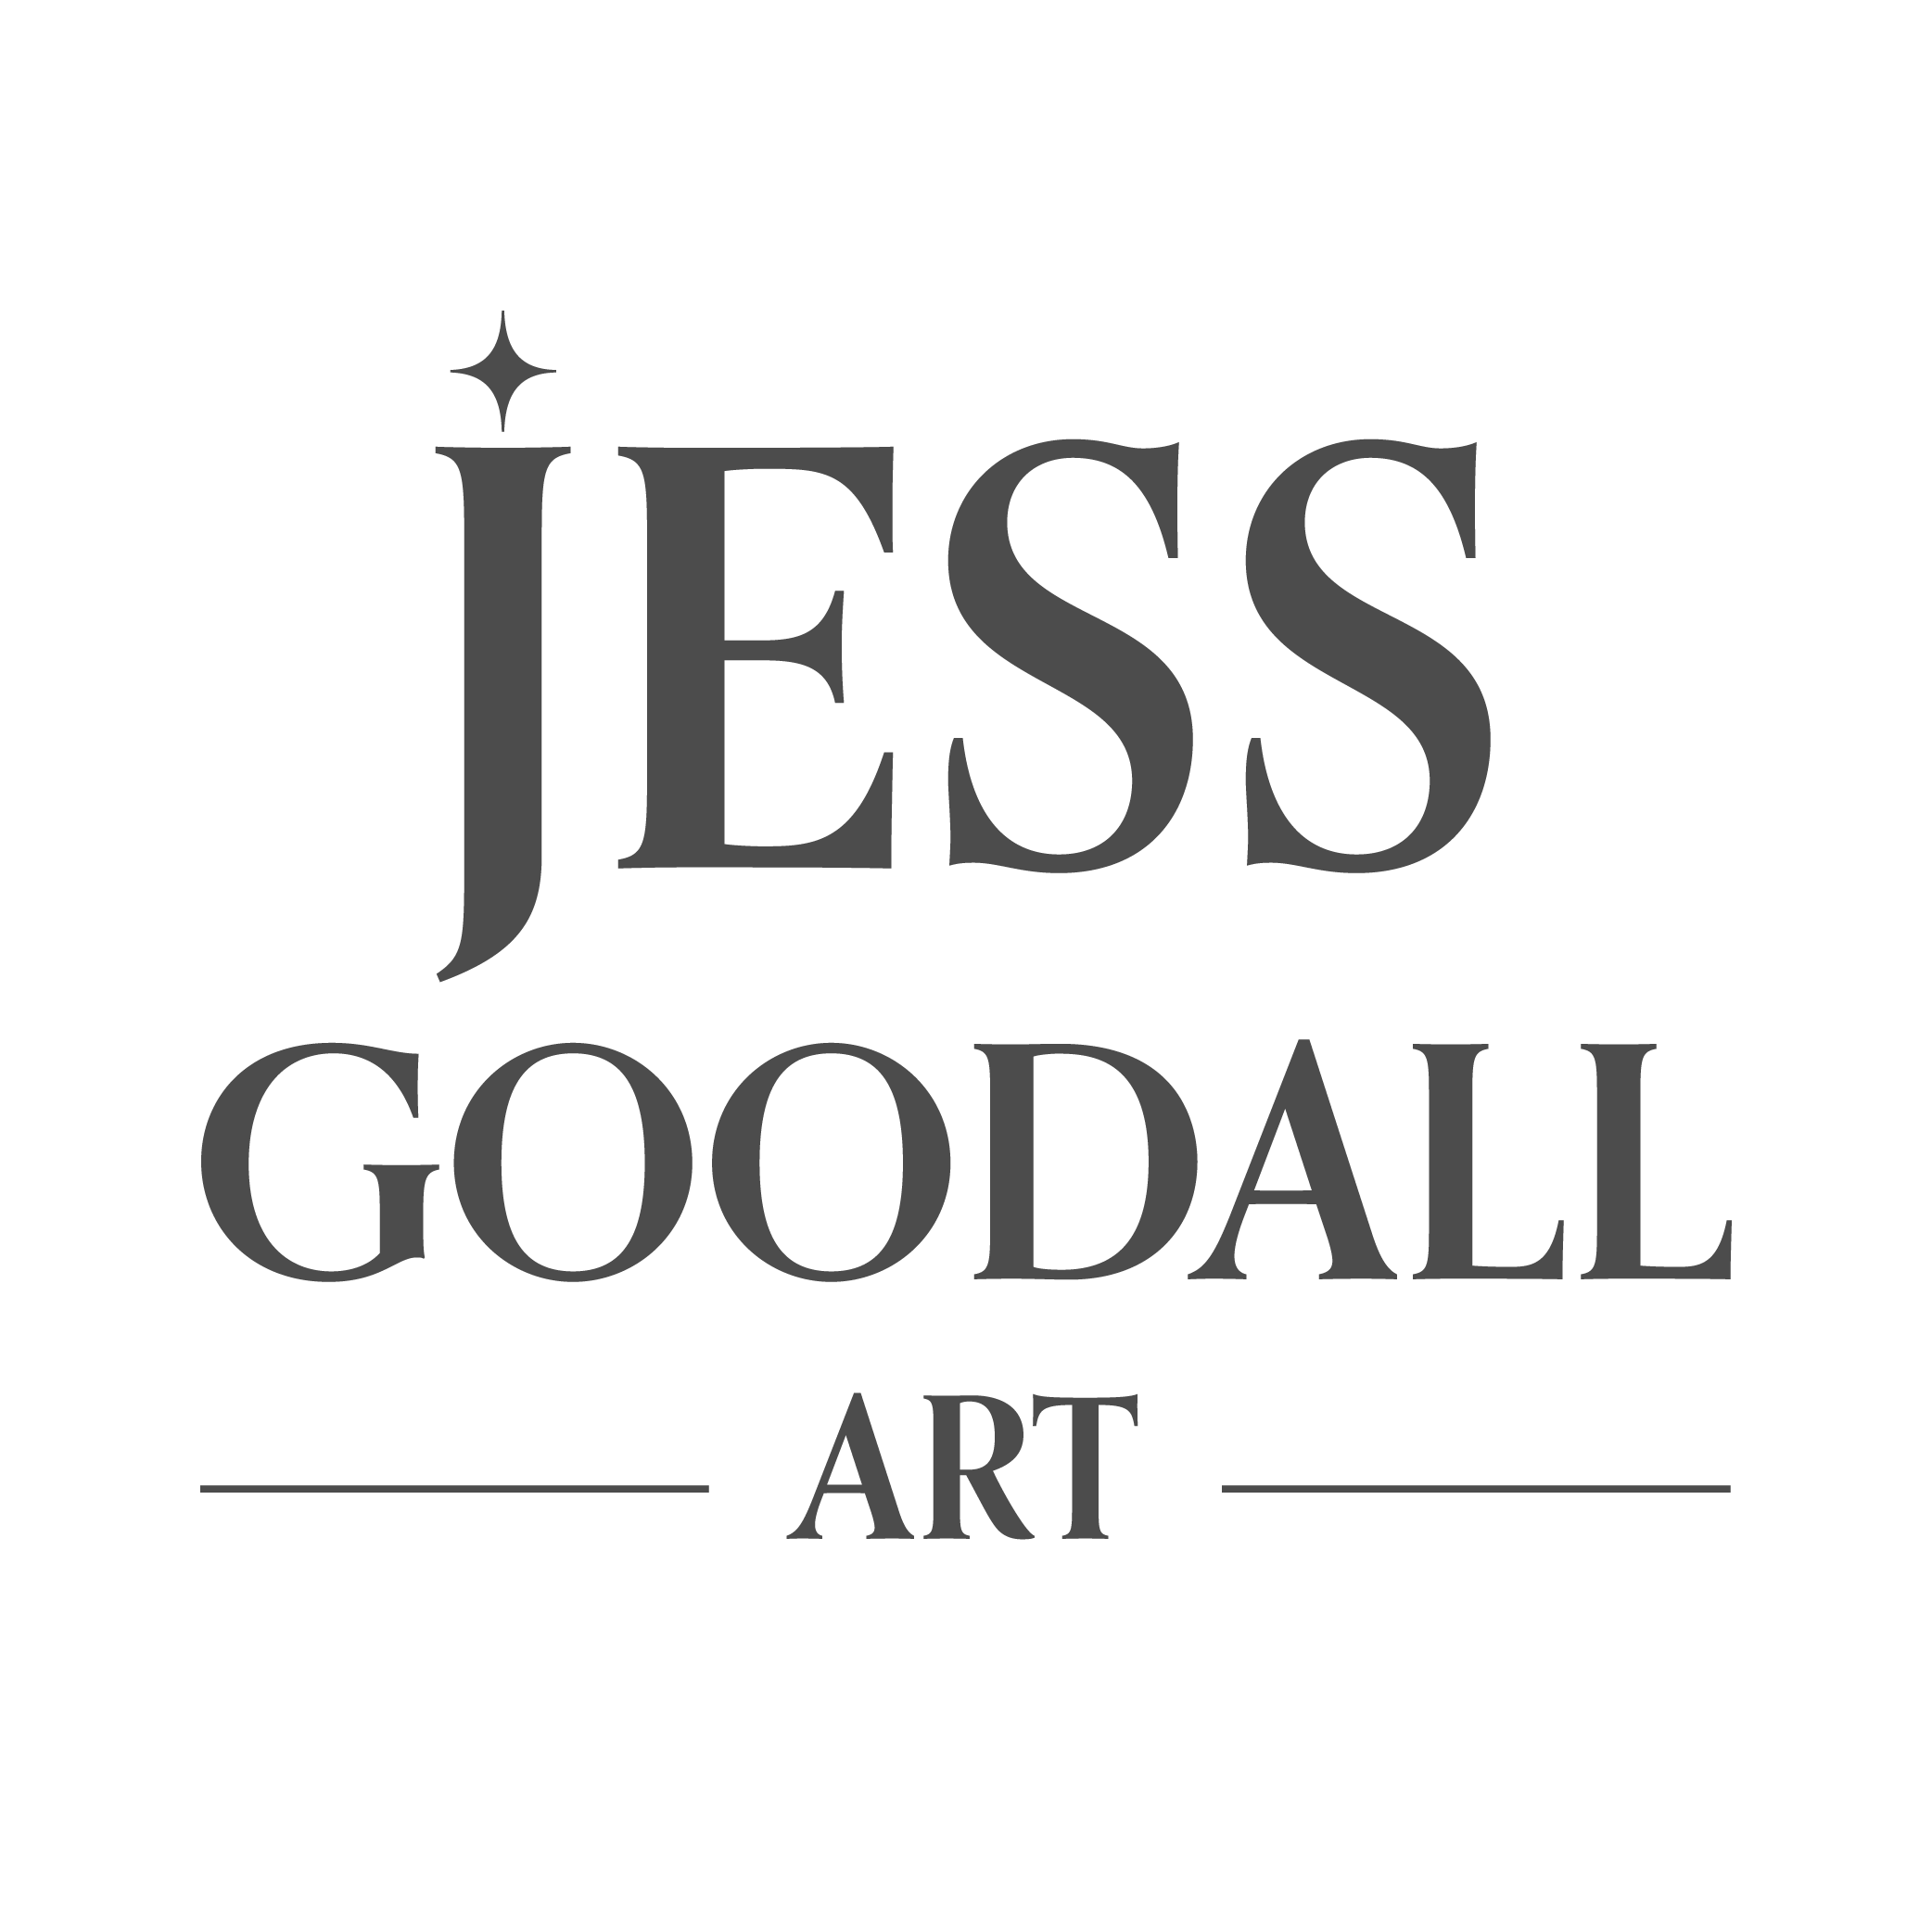 Jessica Goodall